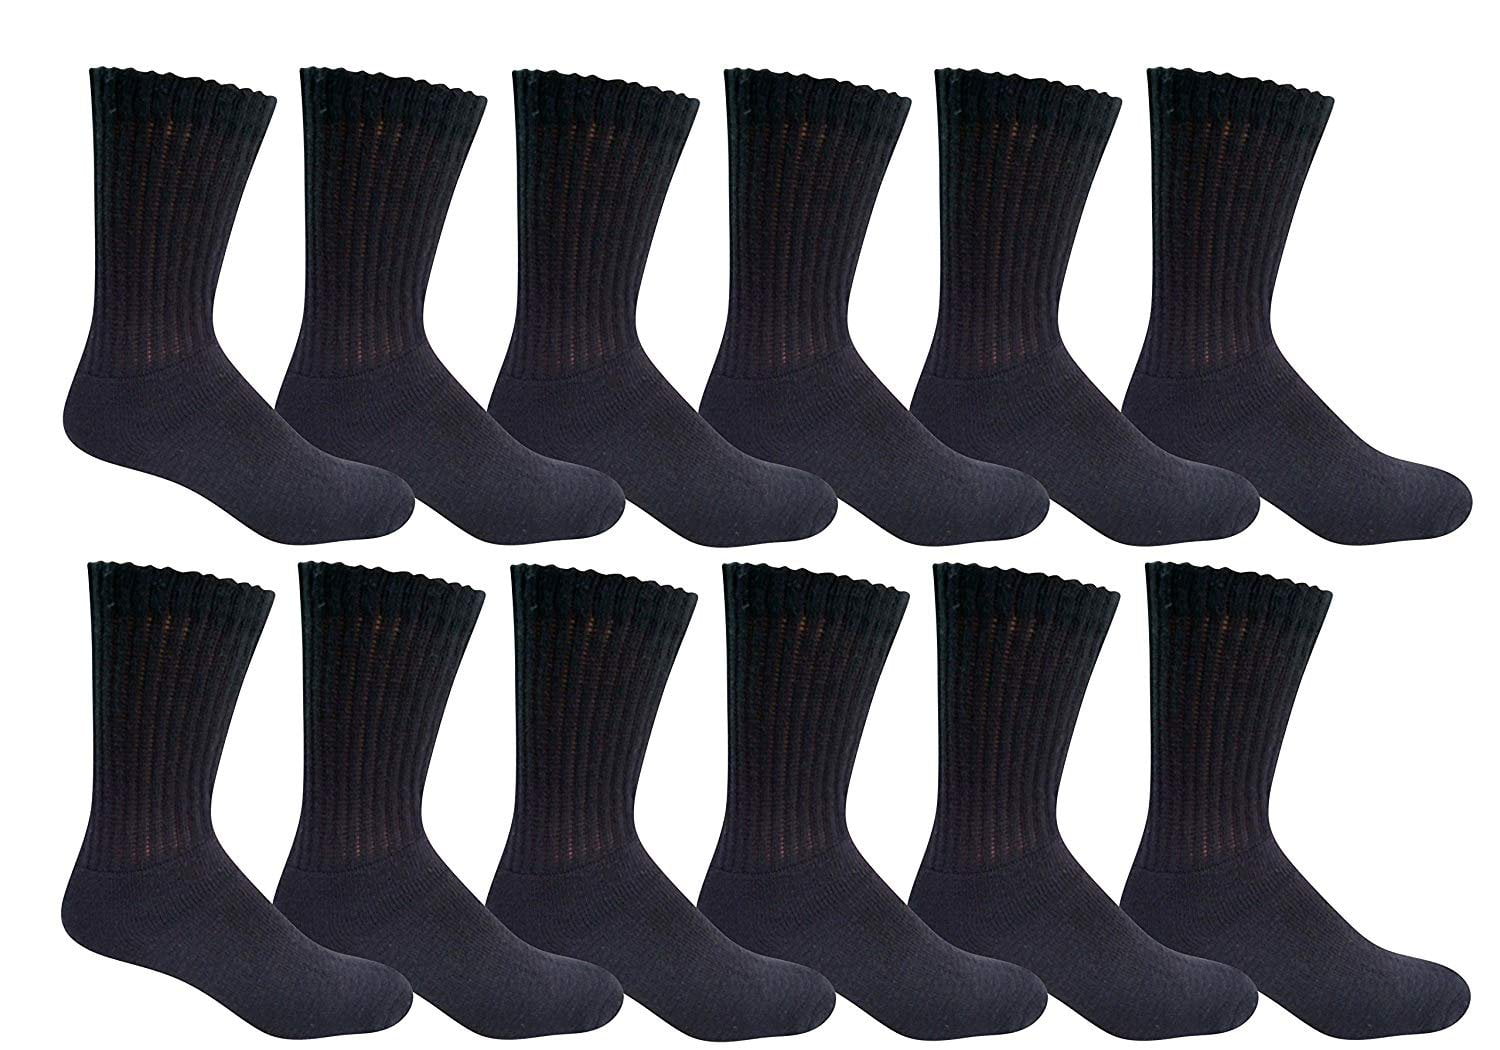 9-11 10-13 Athletic Crew Cotton Black Heel & Toe Socks Men Women 4 12 